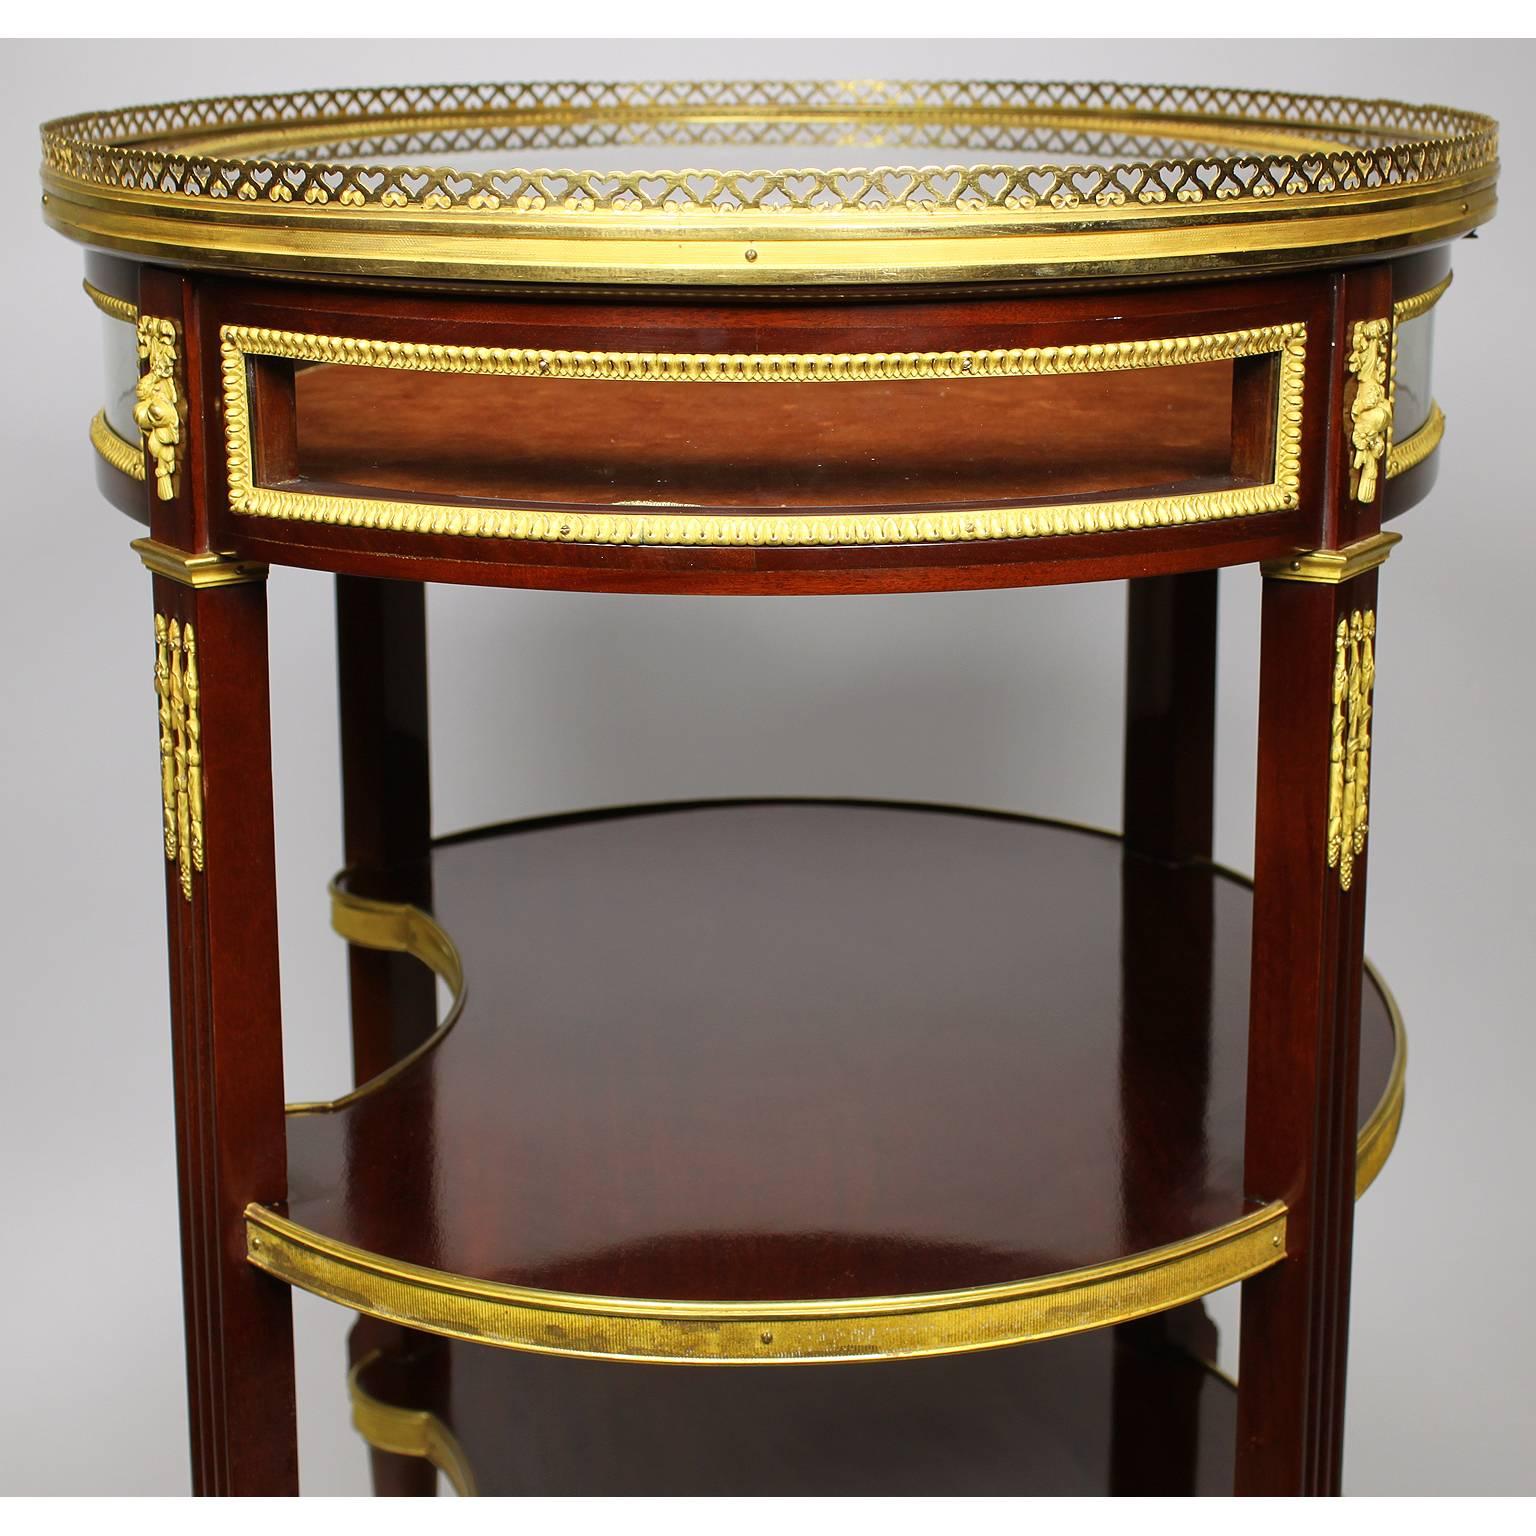 Louis XVI Style Belle Epoque Ormolu-Mounted Vitrine Table, Attributed to Linke 1